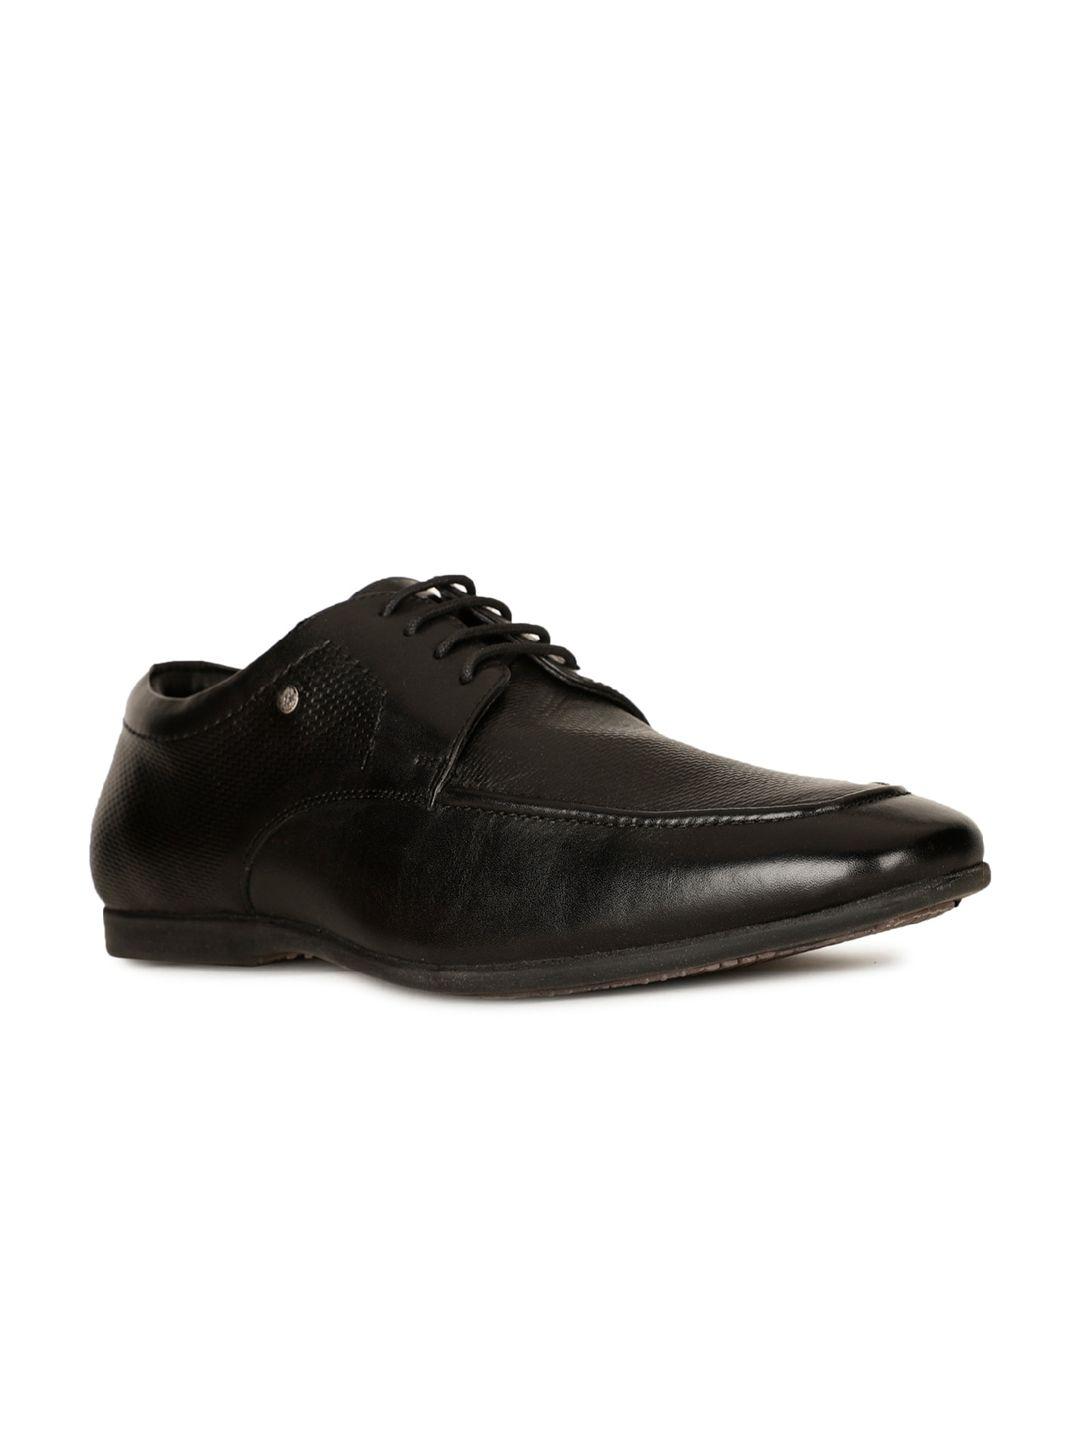 hush-puppies-men-leather-derbys-formal-shoes